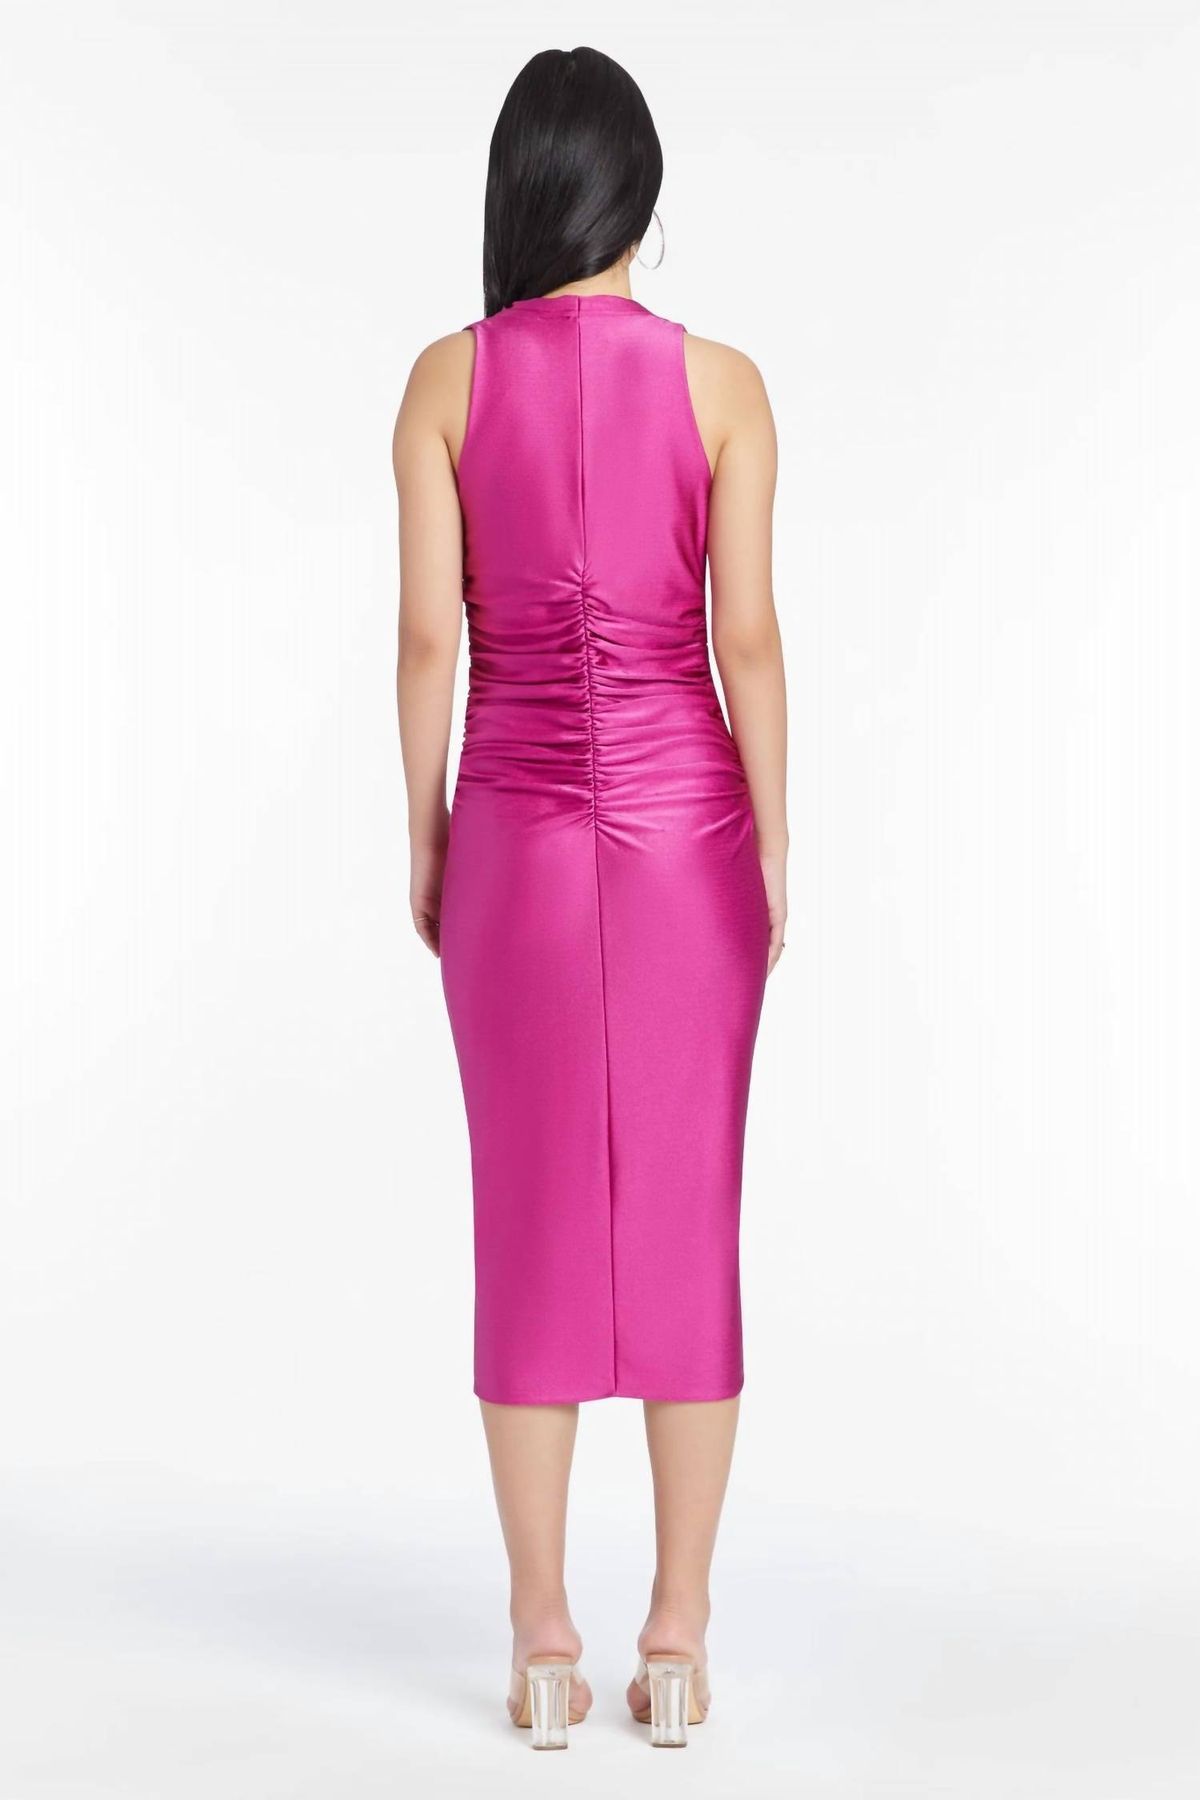 Style 1-1693116390-3855 Amanda Uprichard Size XS Nightclub Satin Hot Pink Cocktail Dress on Queenly